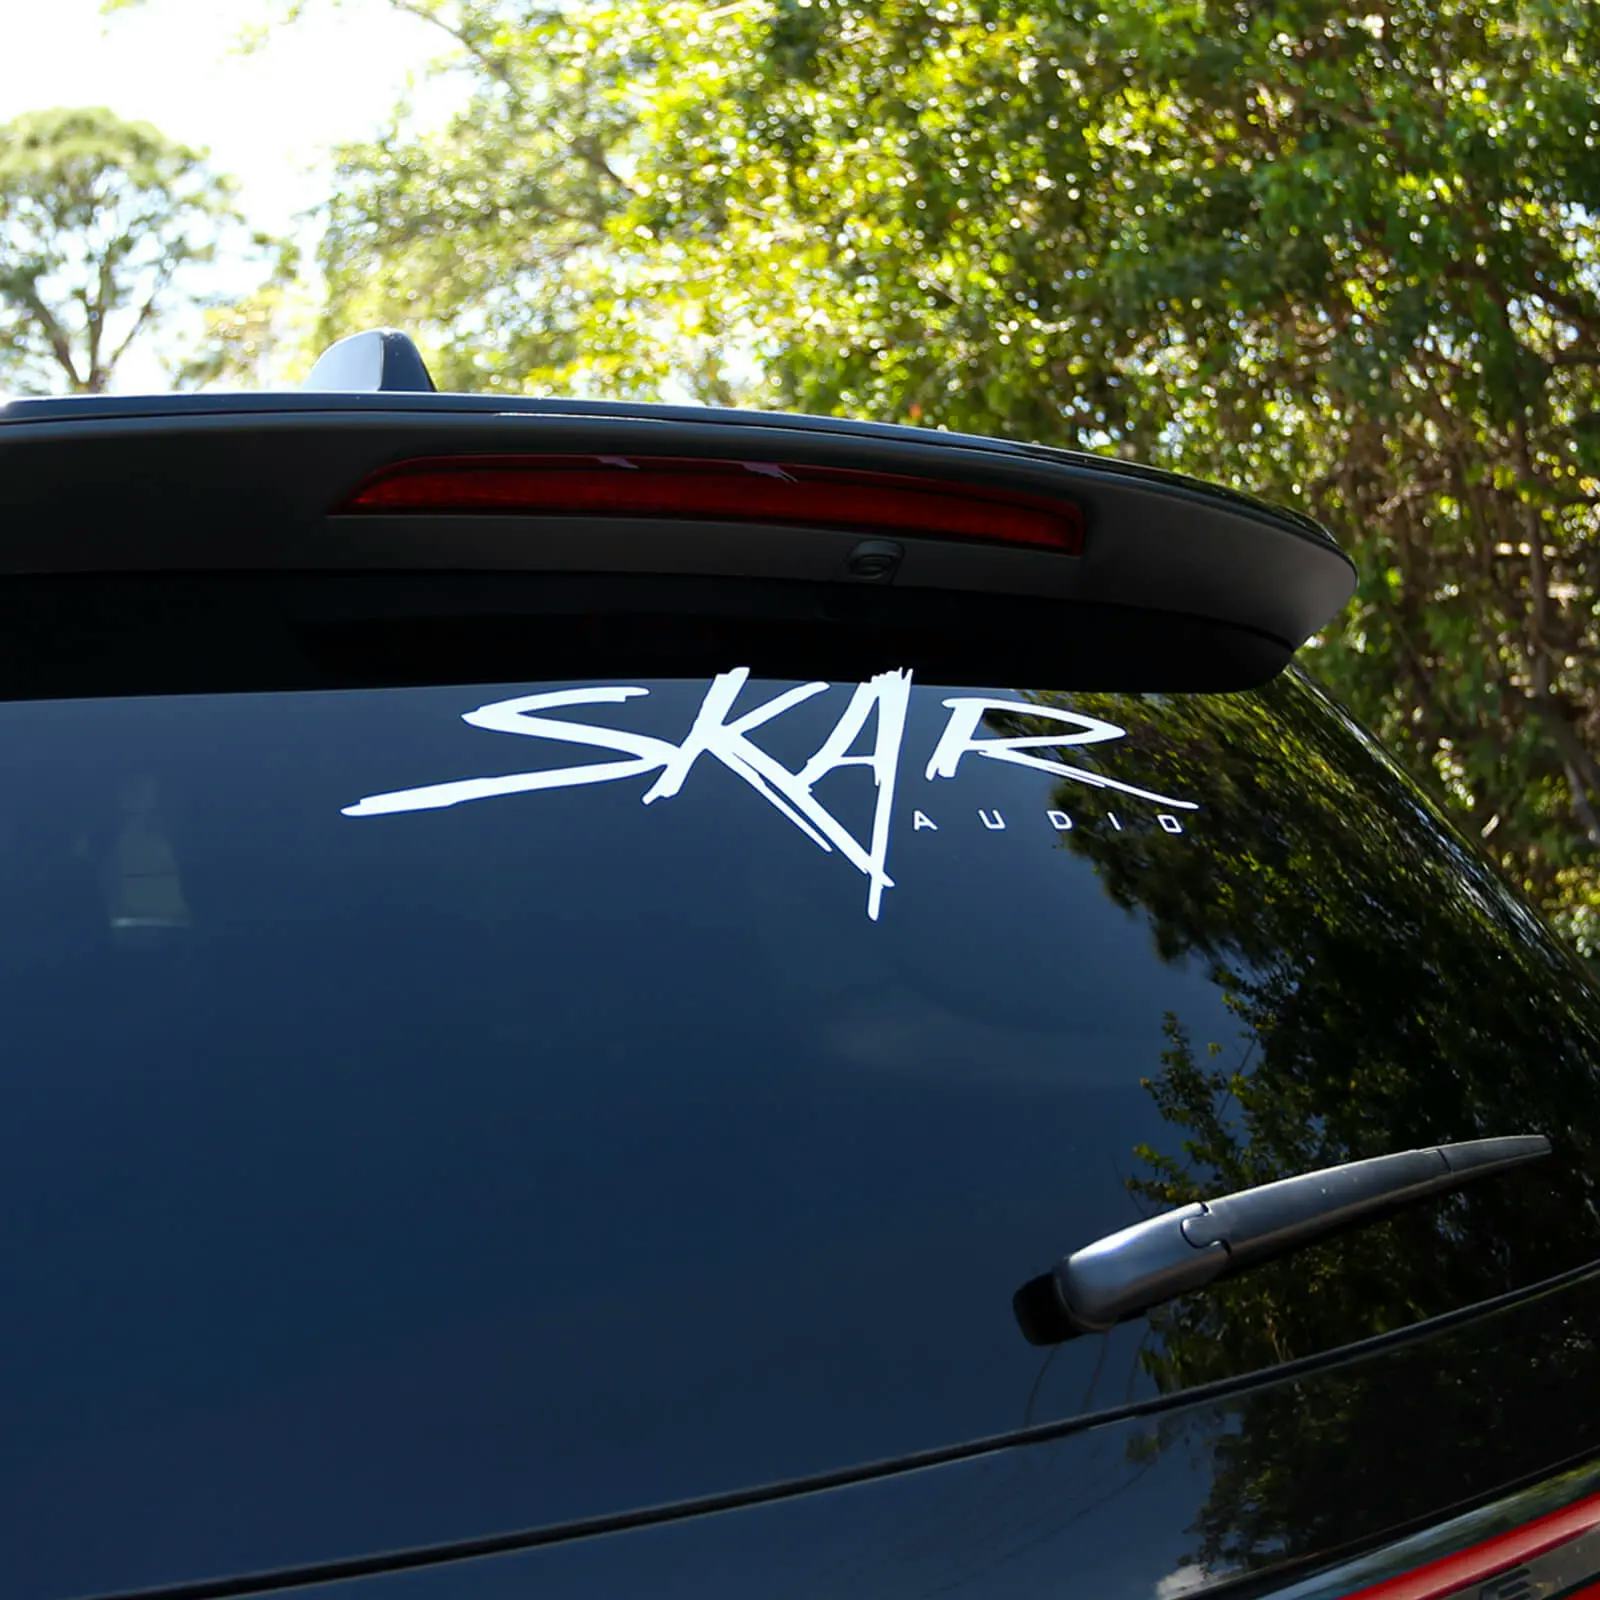 SK-DECAL-LG | 20" x 6" Large Skar Audio Logo Decal #2